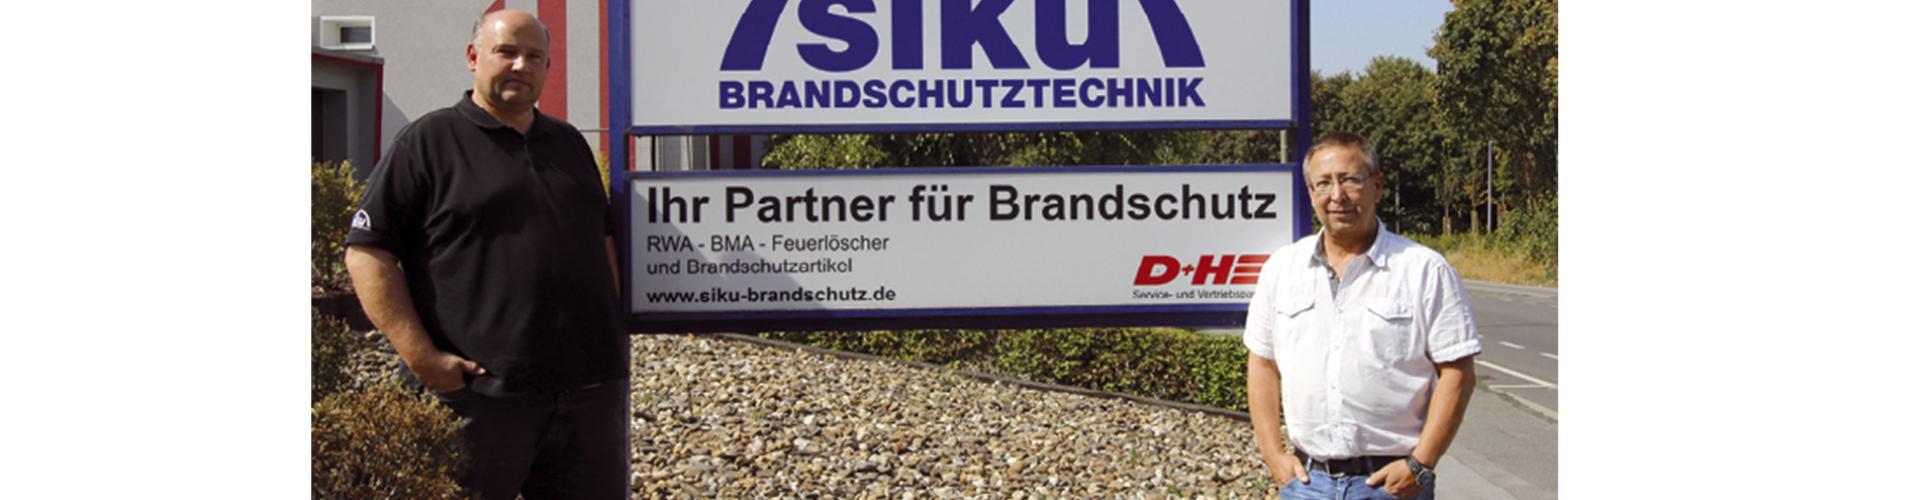 SIKU Brandschutztechnik GmbH cover